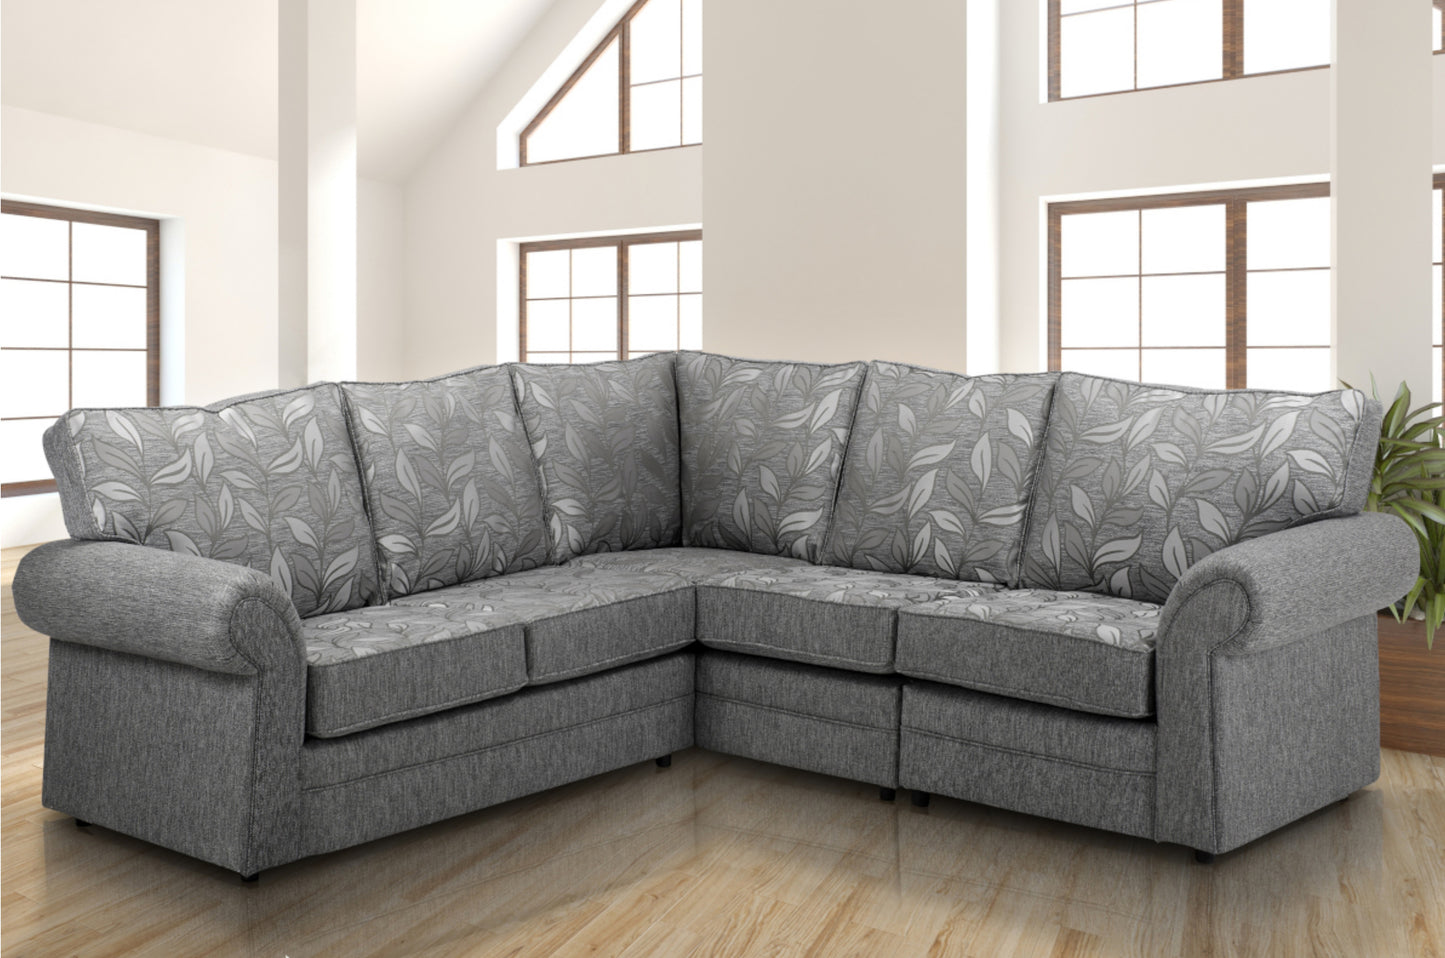 The Delilah Range - 2C2 Cornergroup Sofa | Custom Options Available